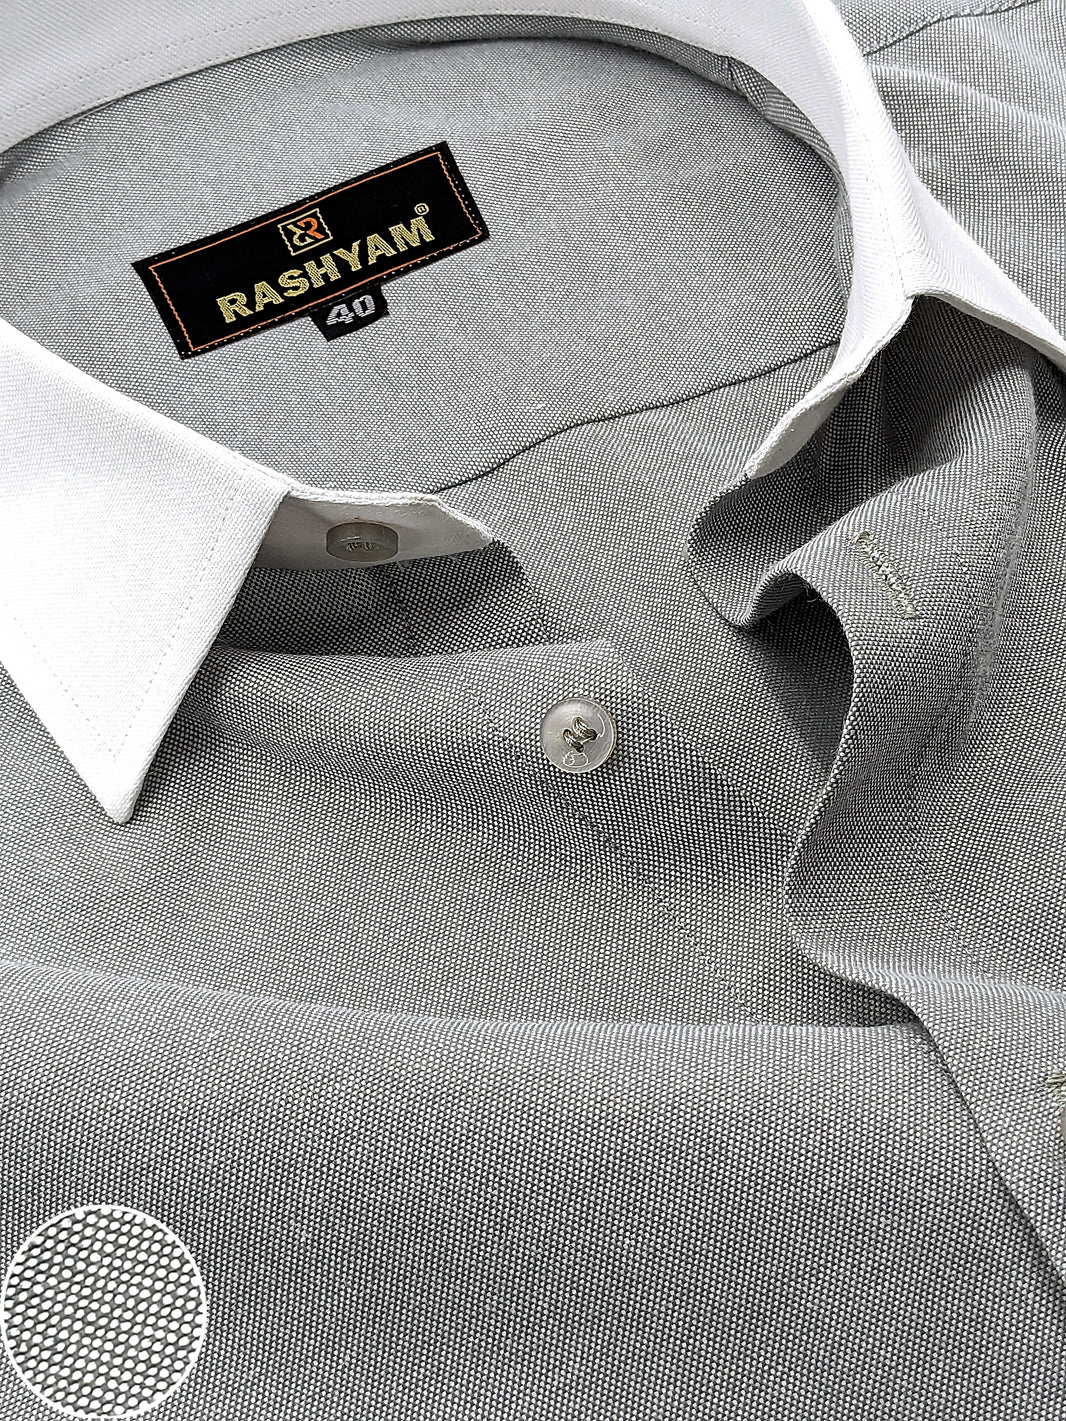 Luxury Premium Cotton Formal Shirts For Men – Rashyam Clothing Brand